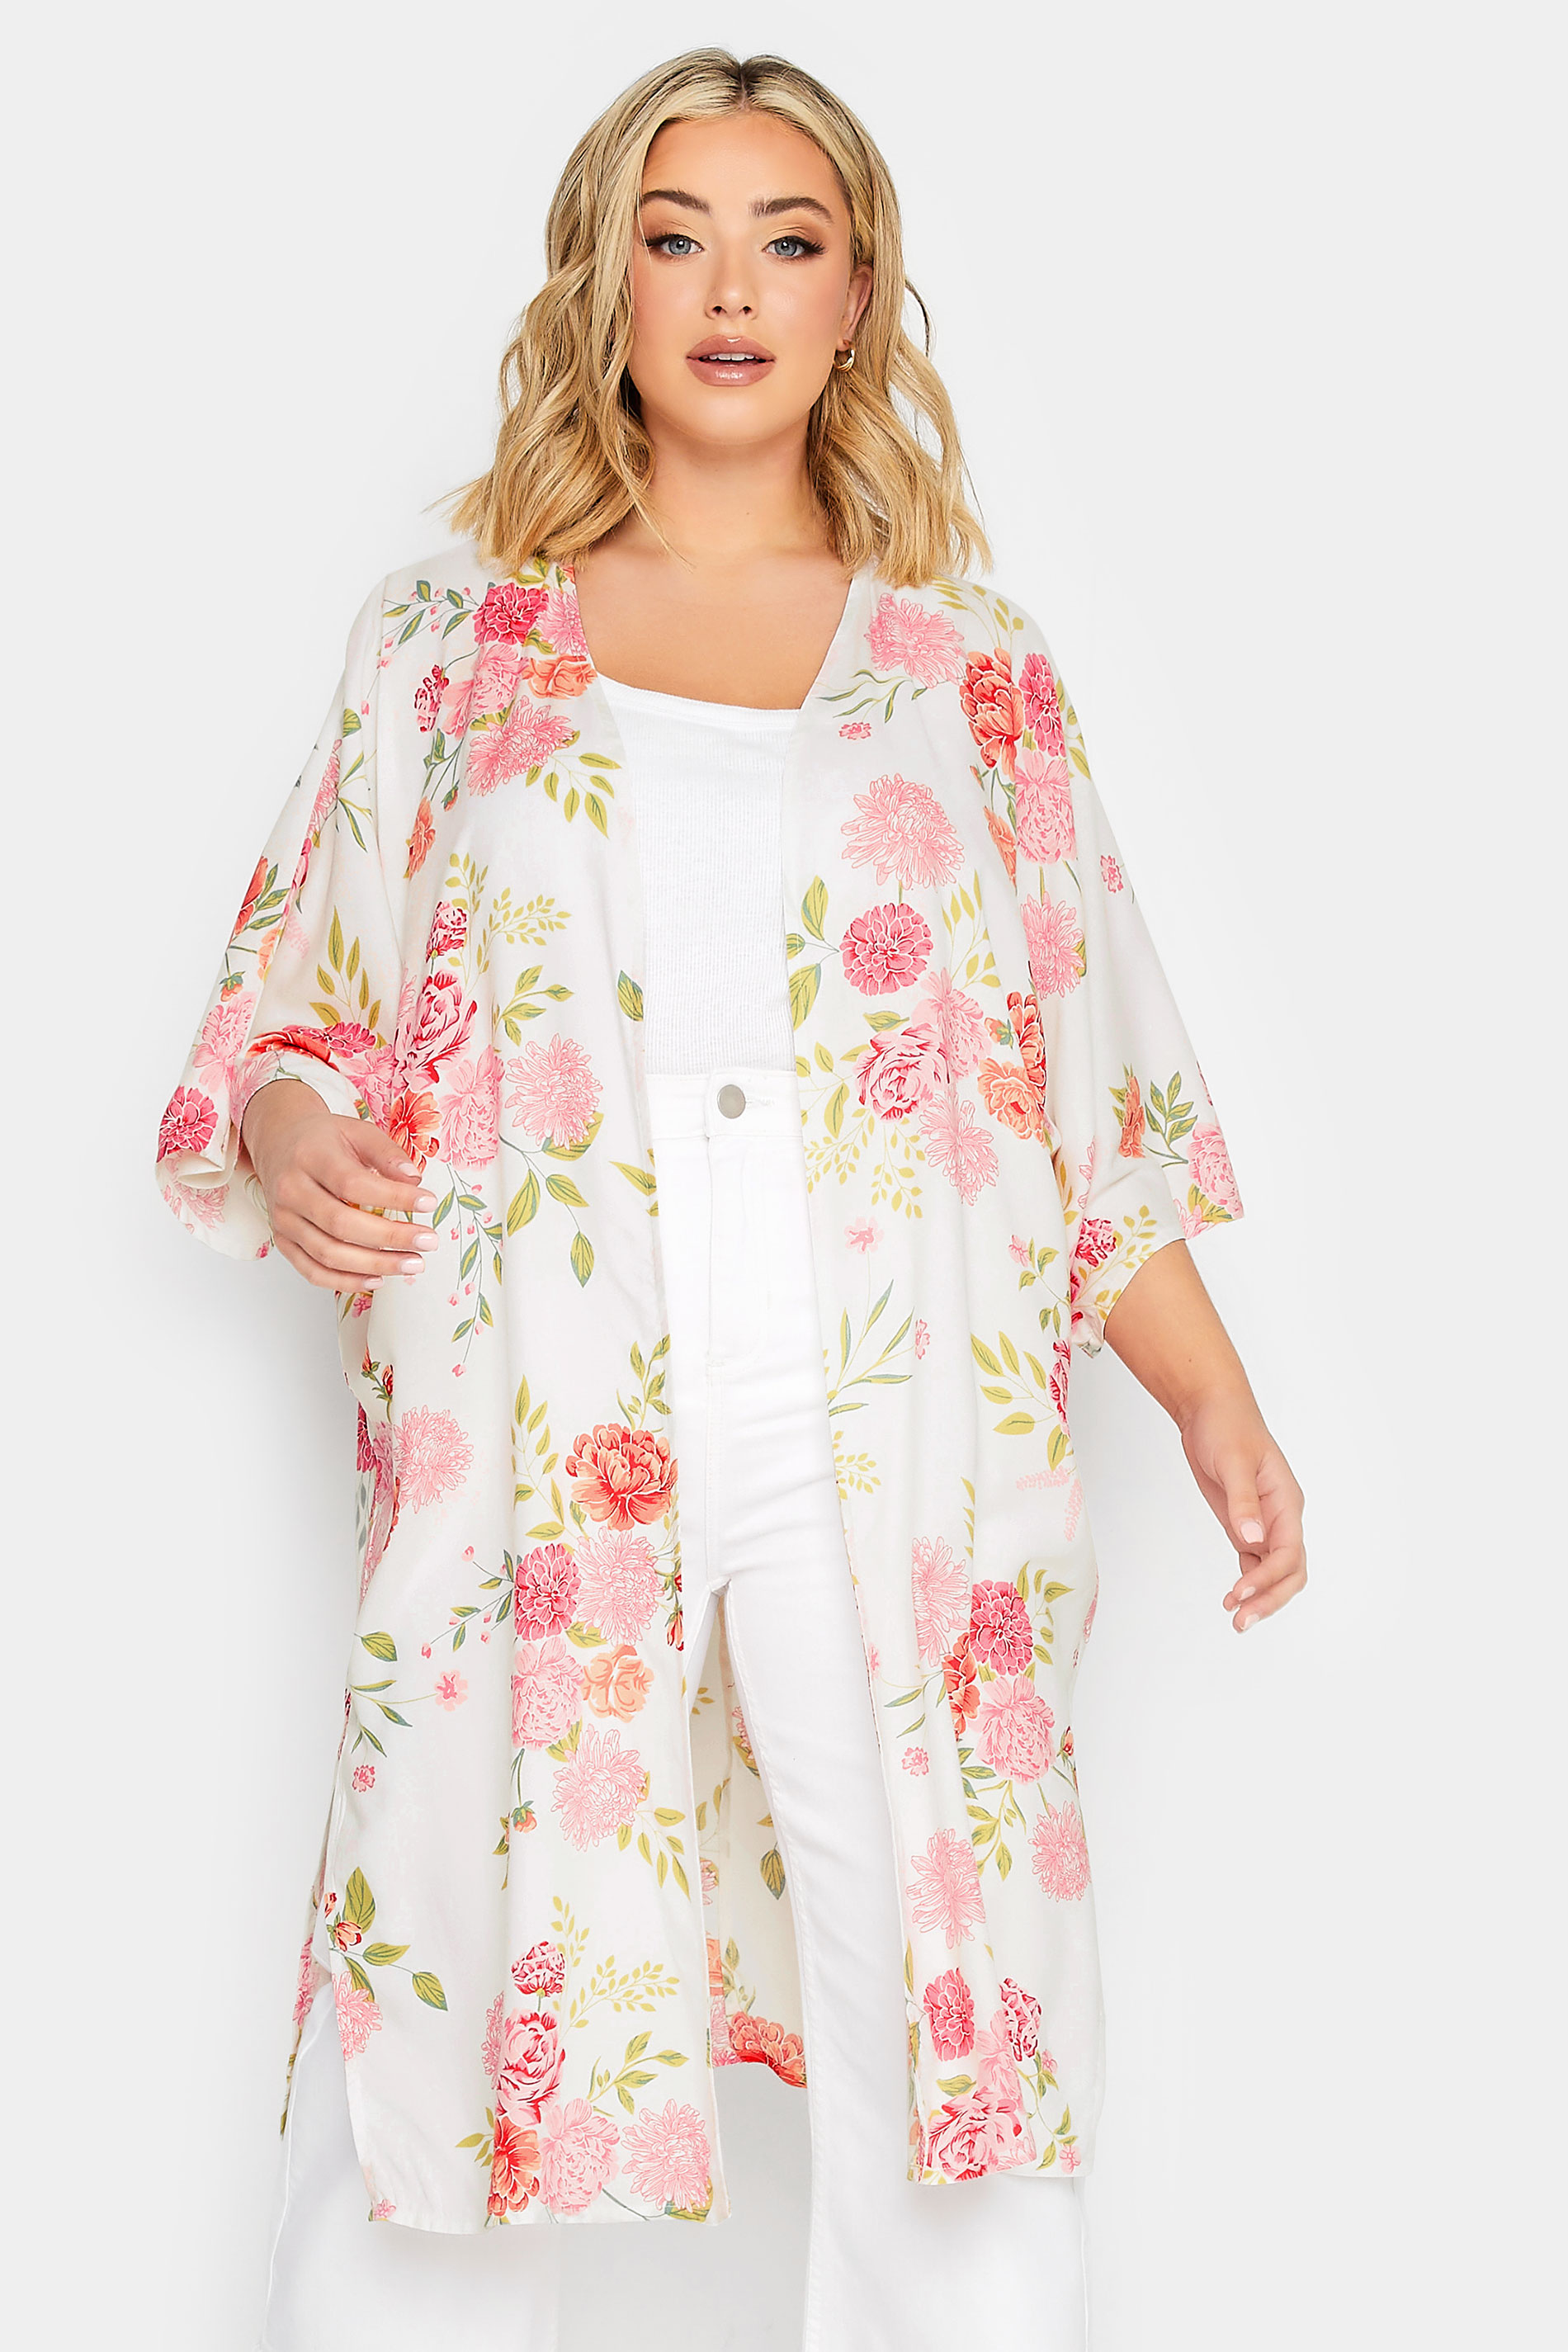 YOURS Plus Size White Floral Print Longline Kimono | Yours Clothing 1